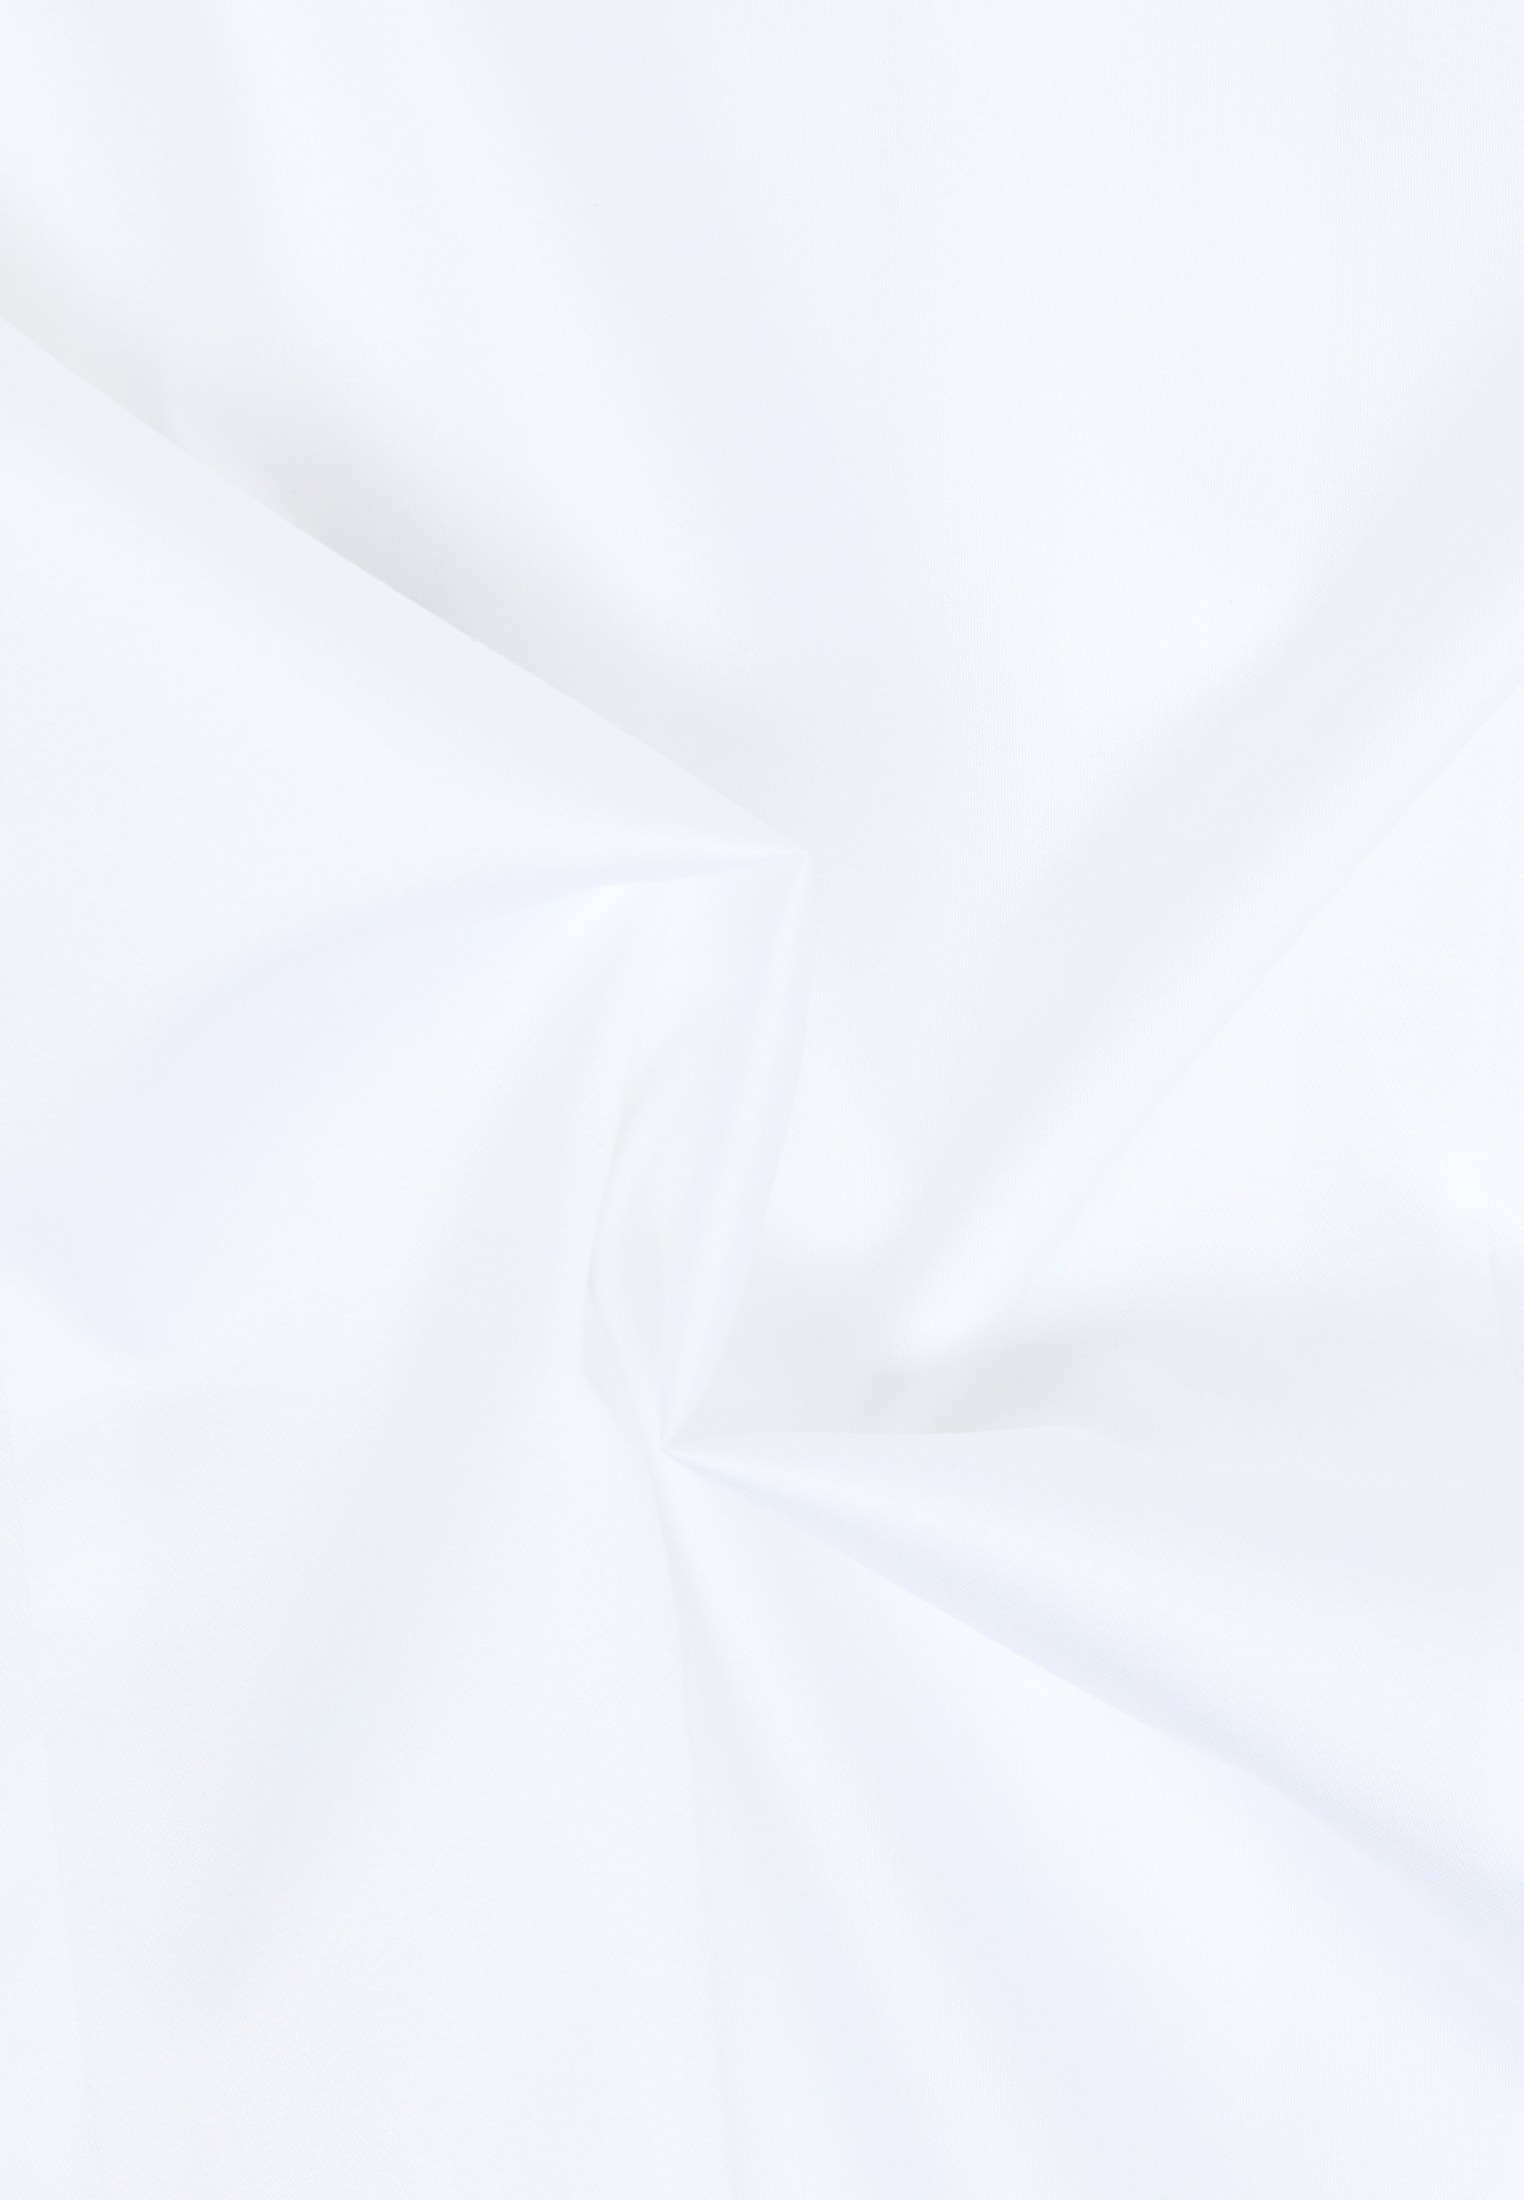 Satin Shirt Blouse in white plain